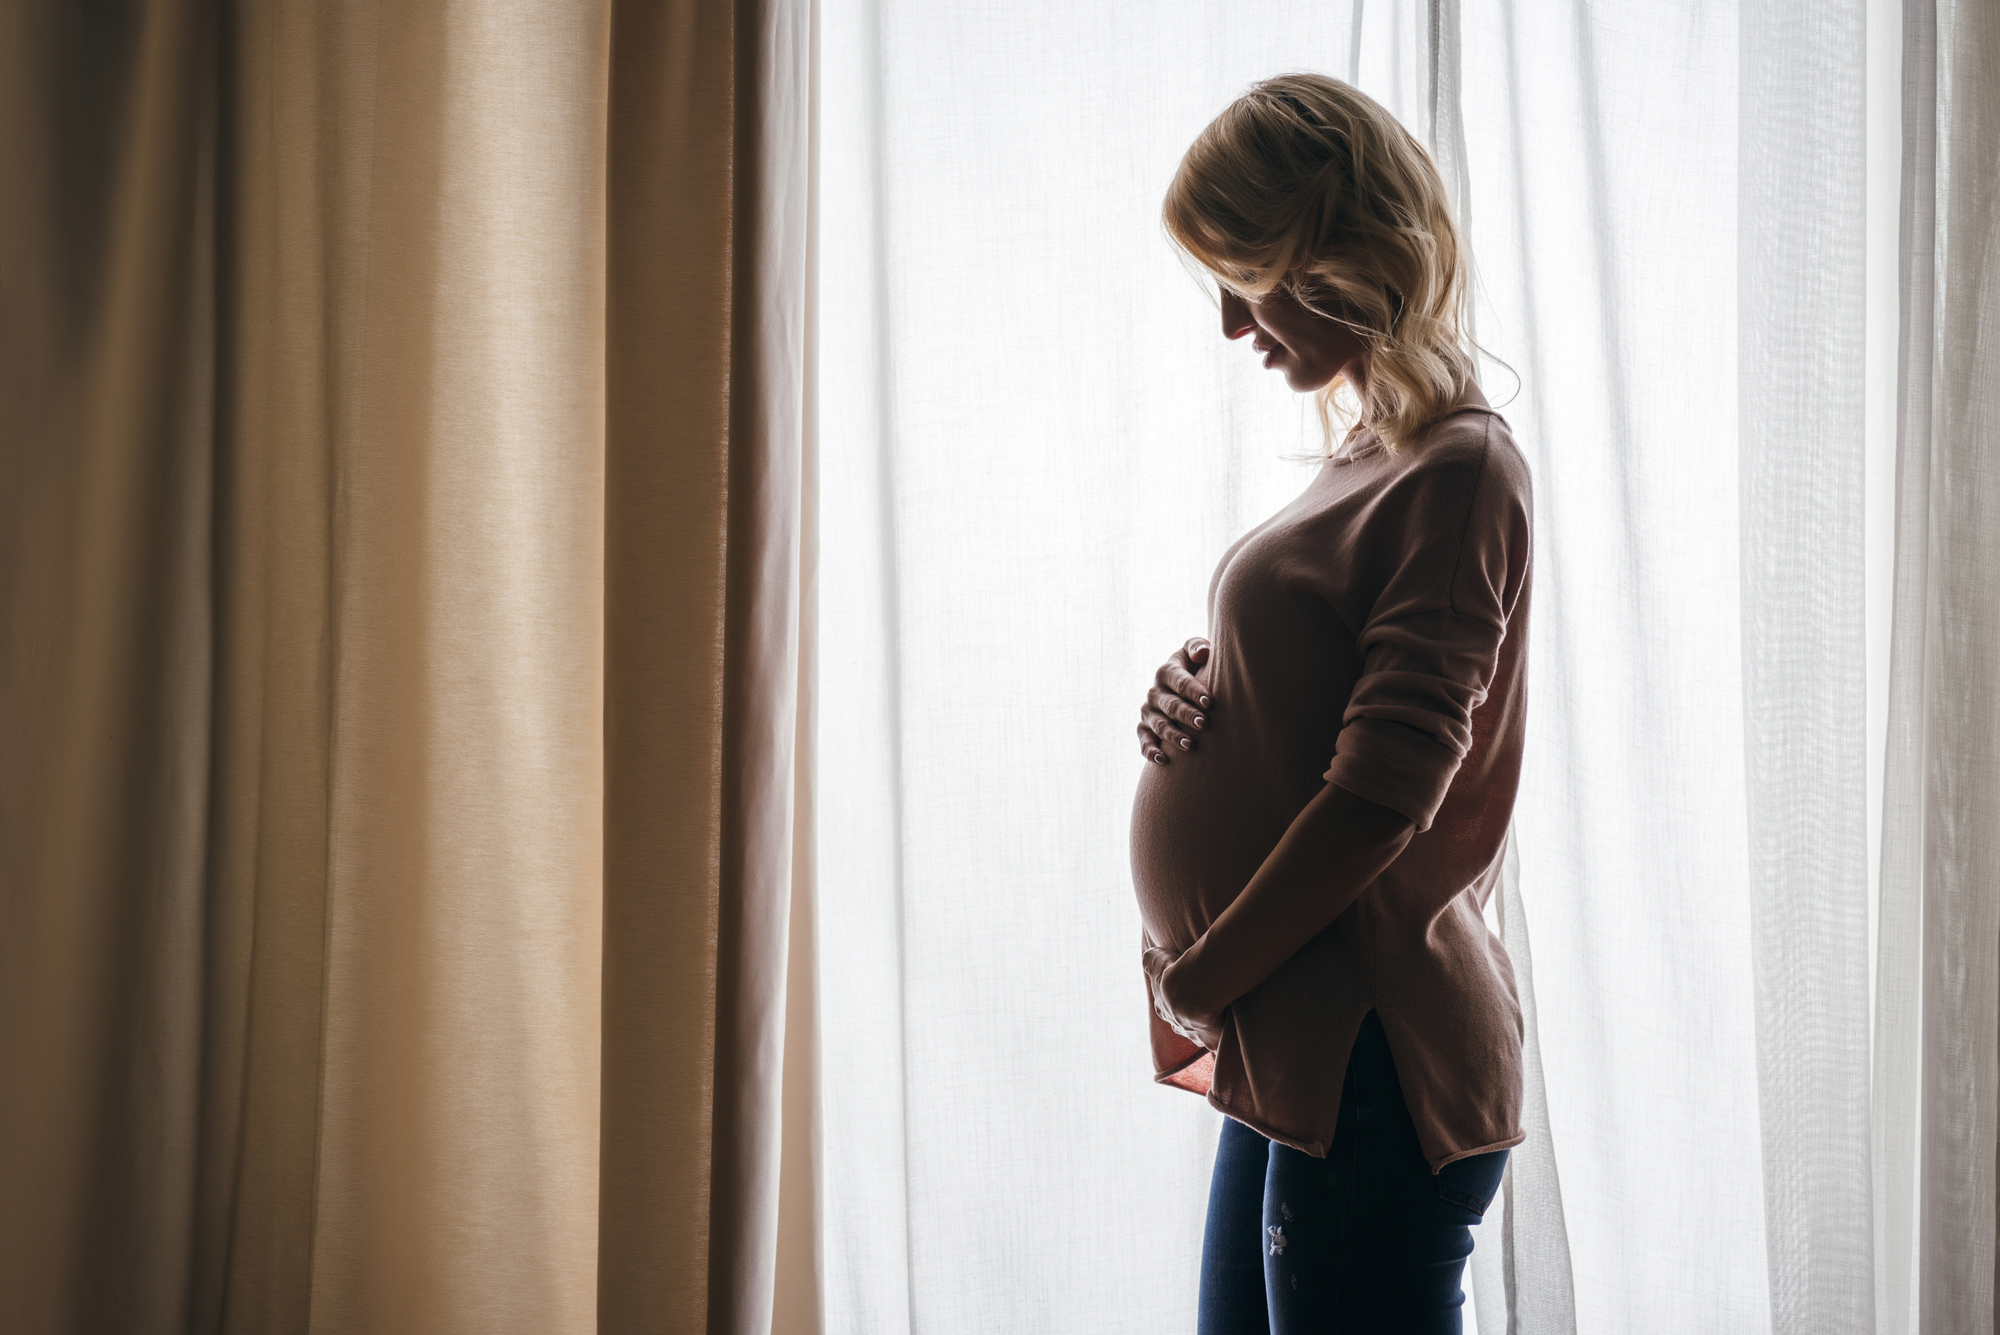 pregnant-women-meet-rejection/denial-in-emergency-rooms